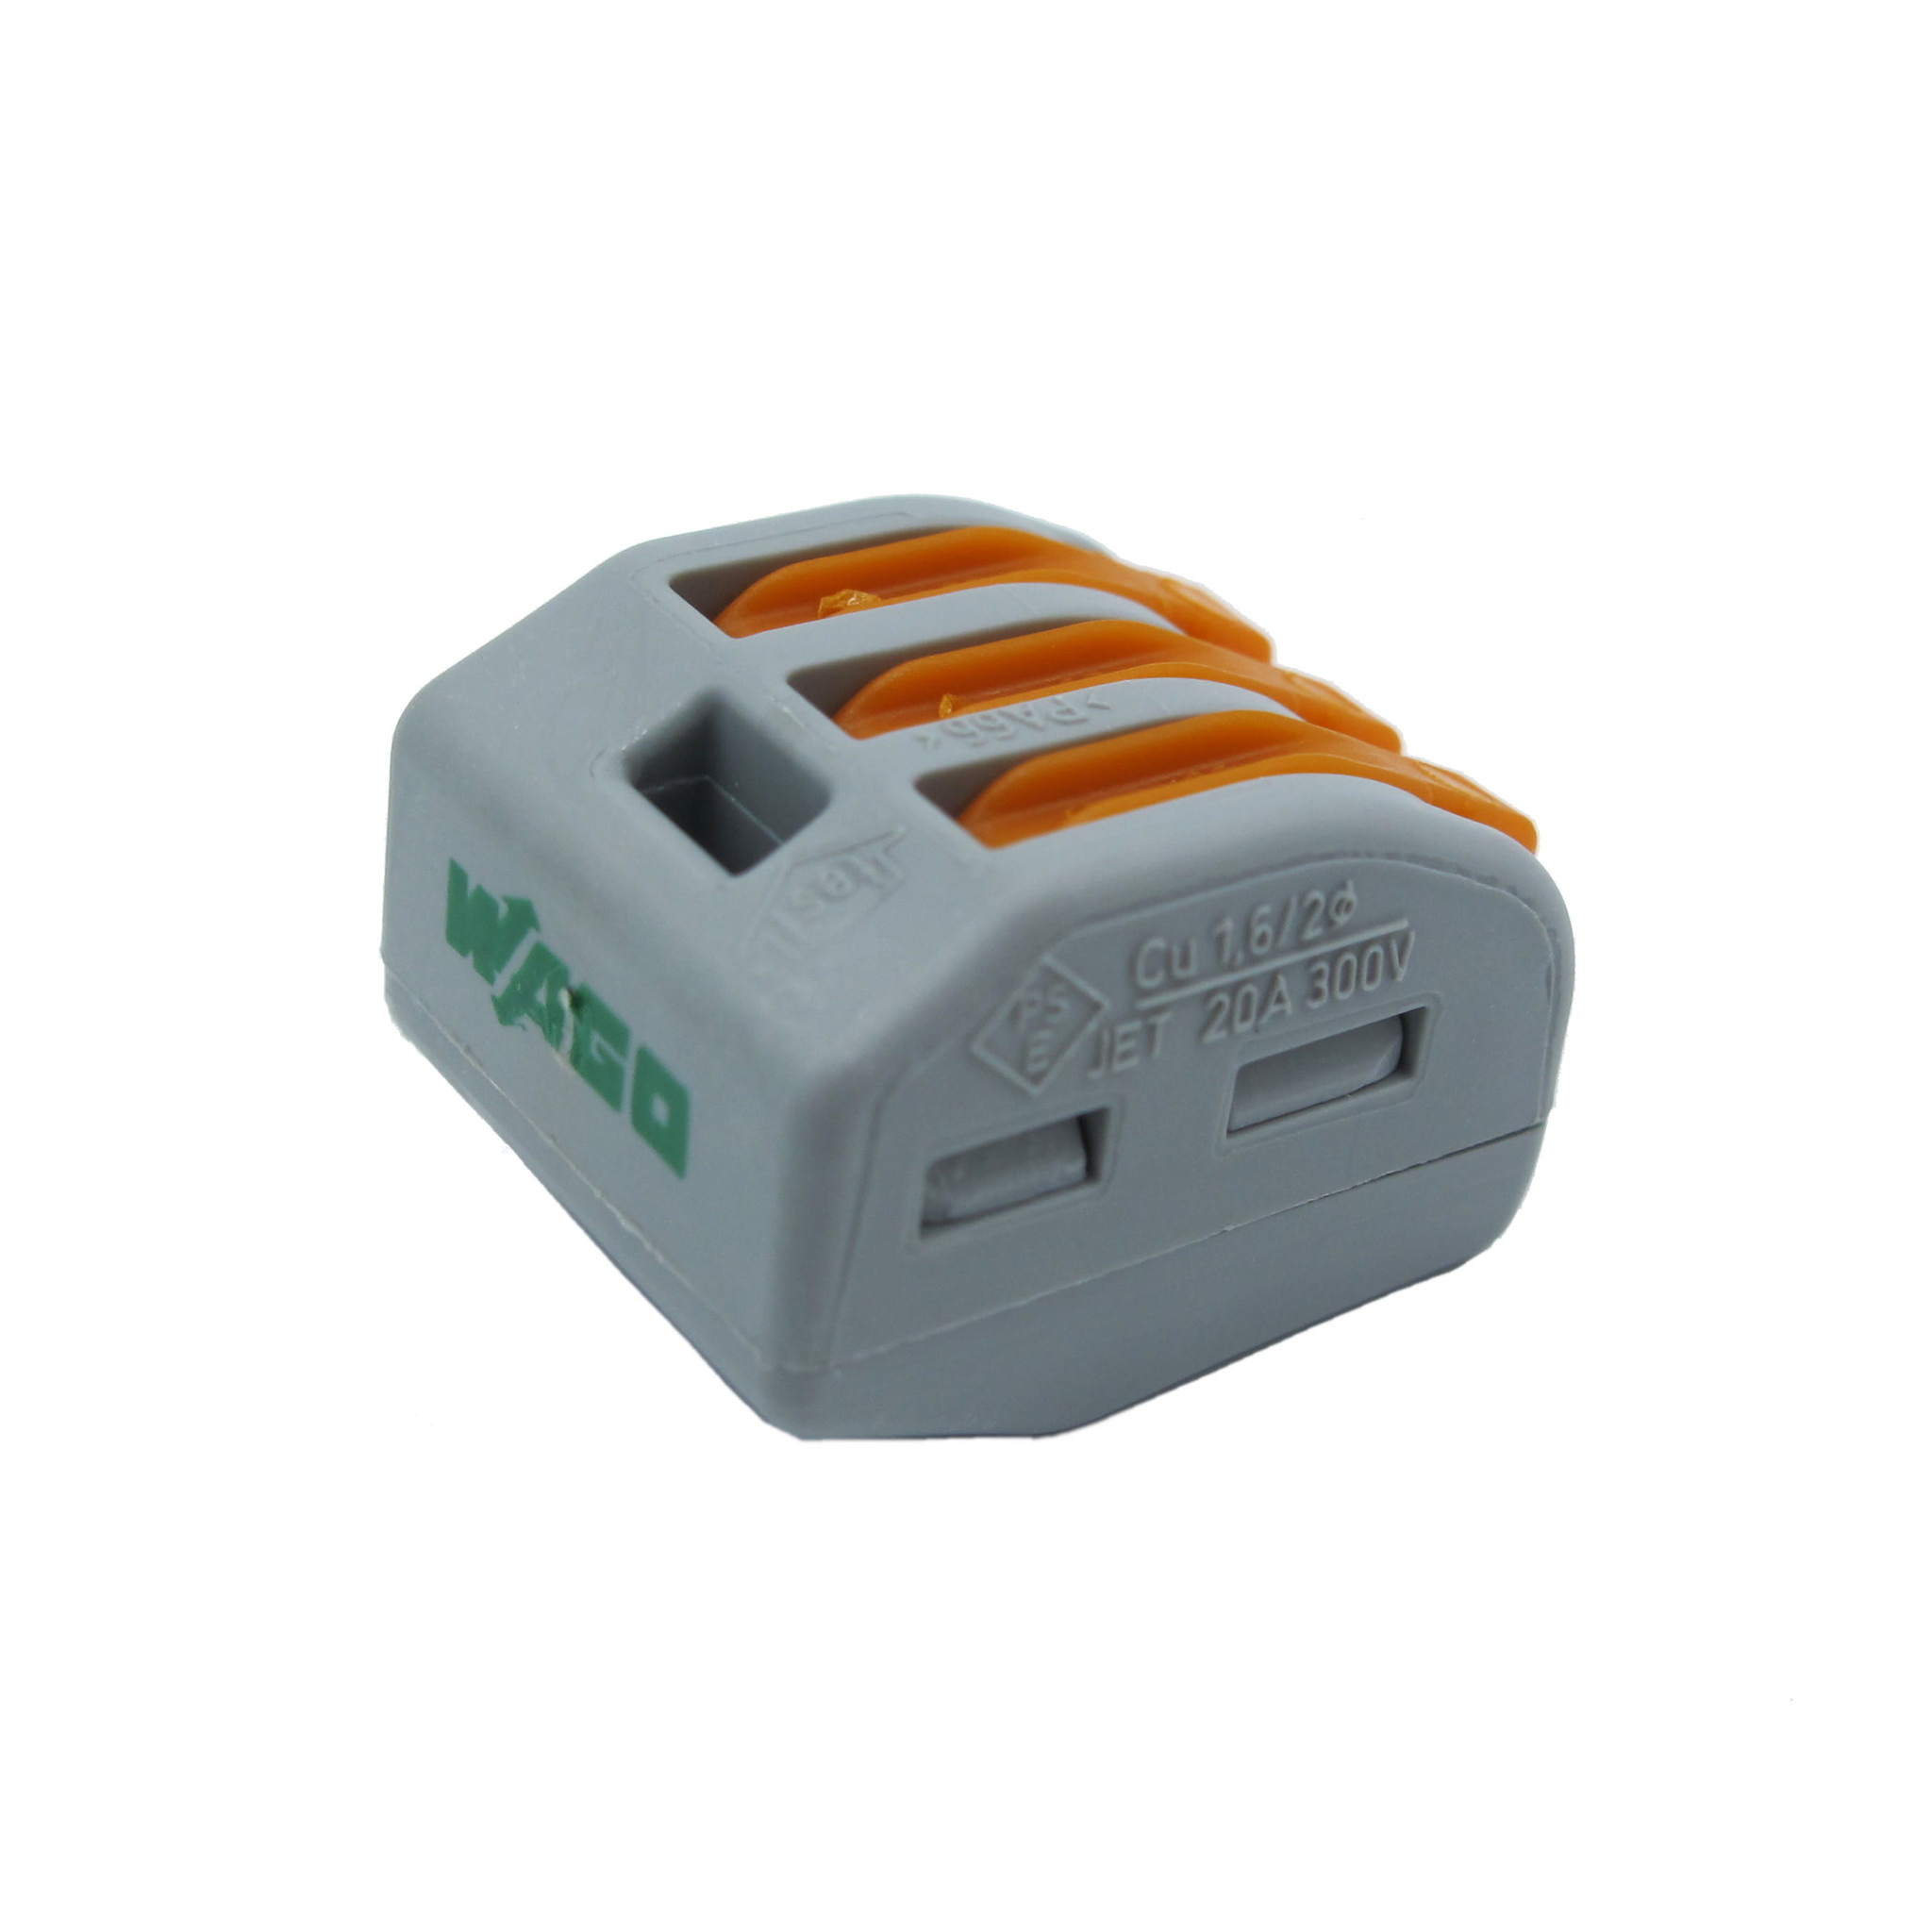 Elektrofachmarkt-online - VDE Mini Hebelklemme 3-polig - Pack mit